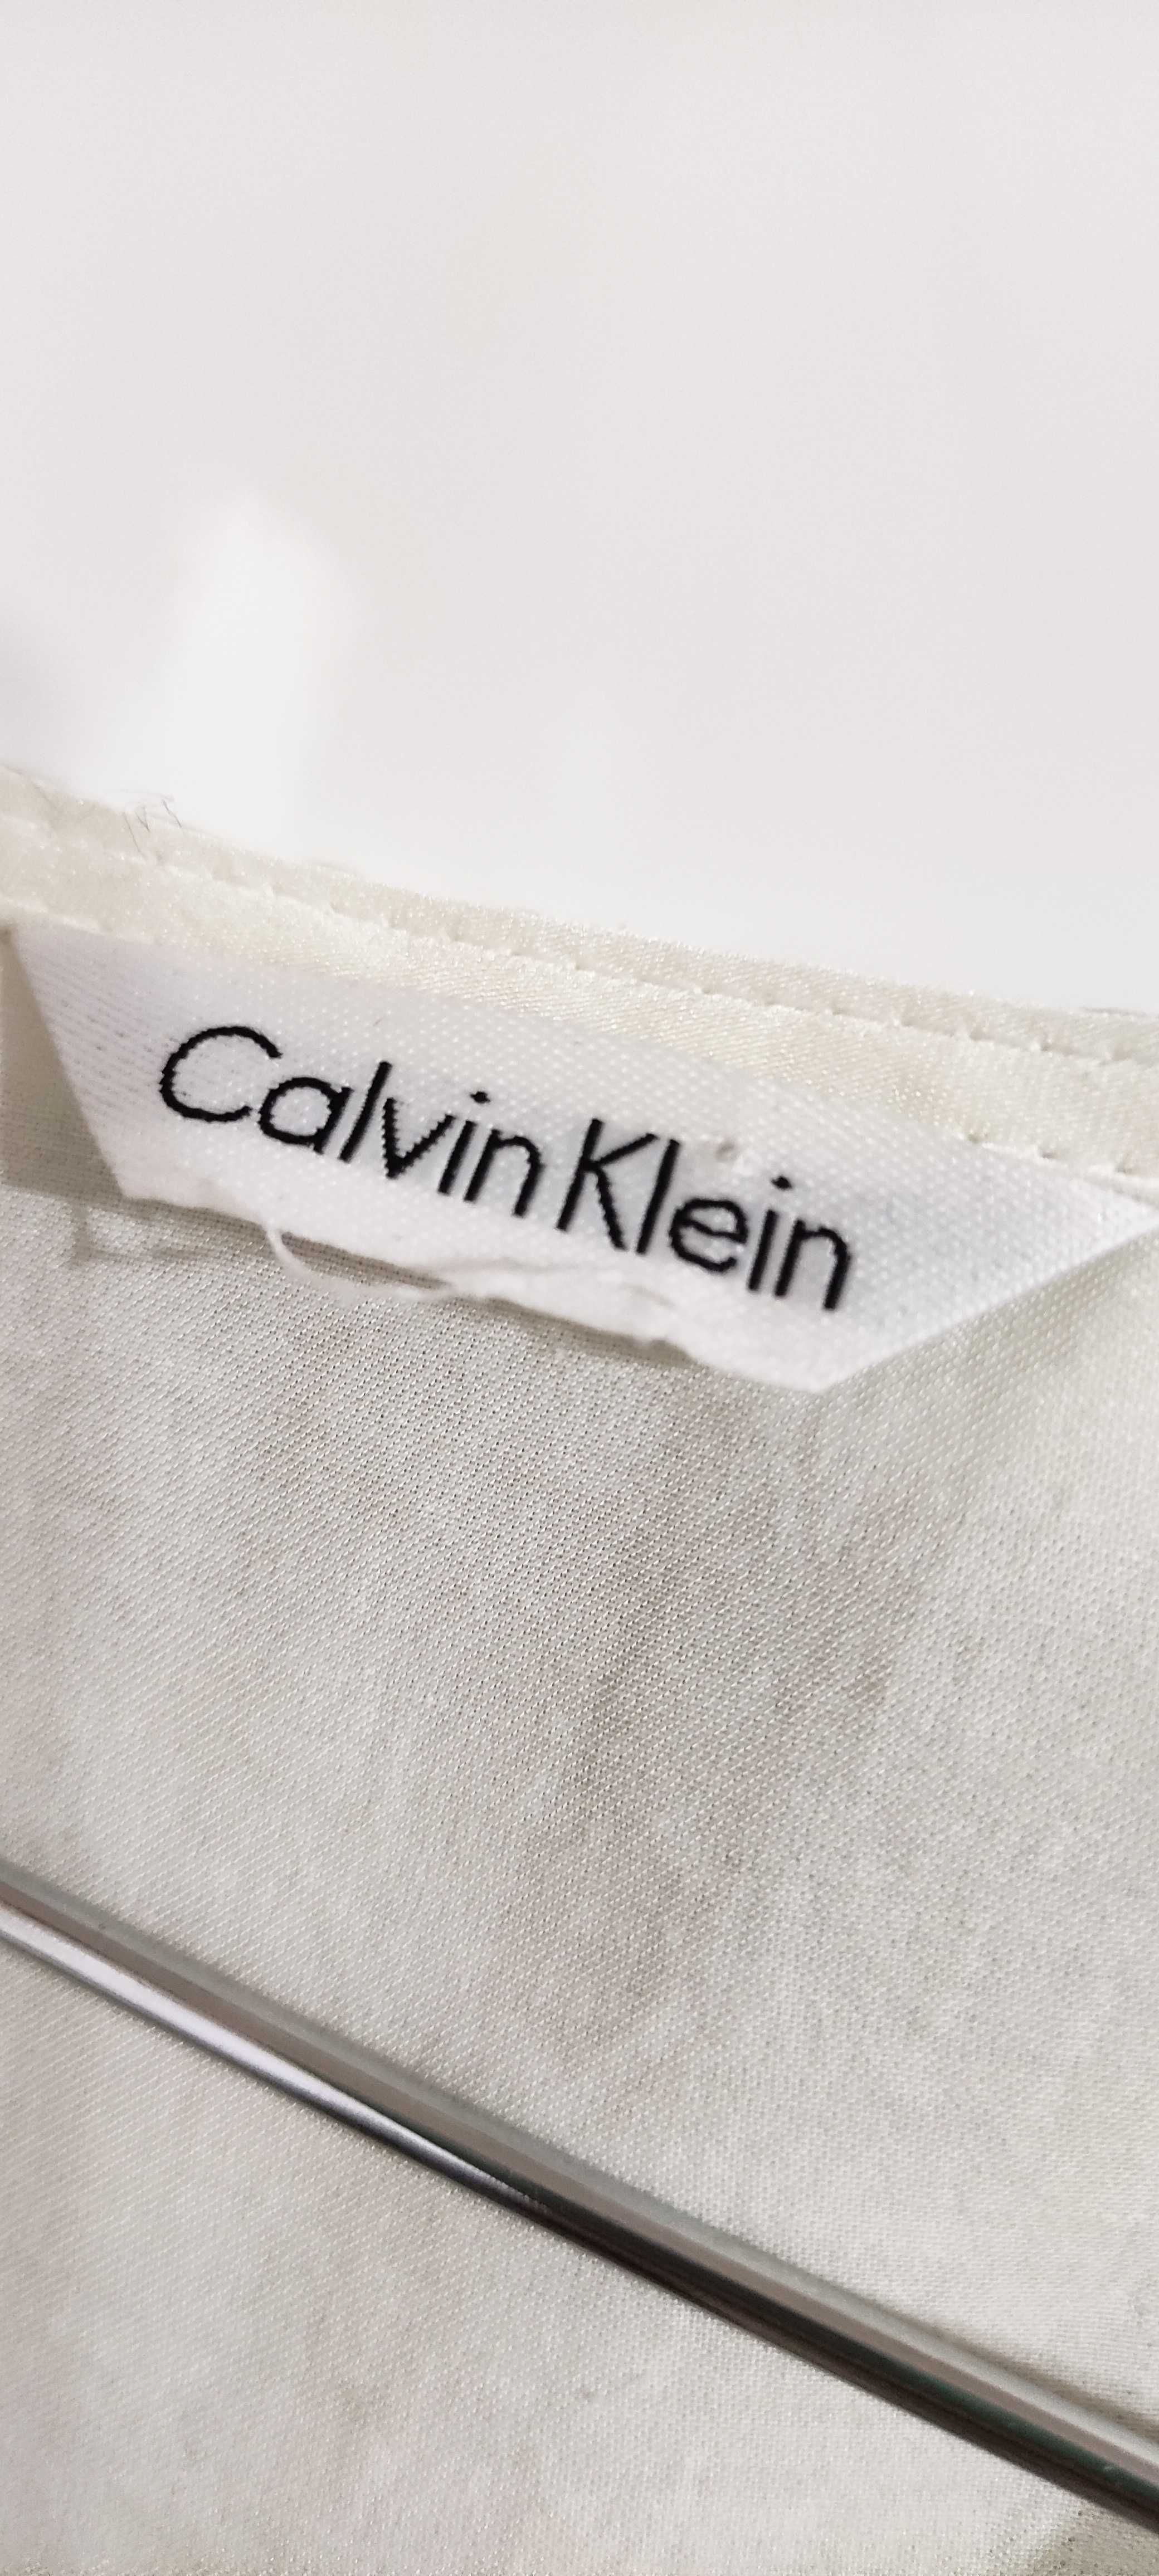 Top bluzka Calvin Klein kremowy ecru ciapki czarne